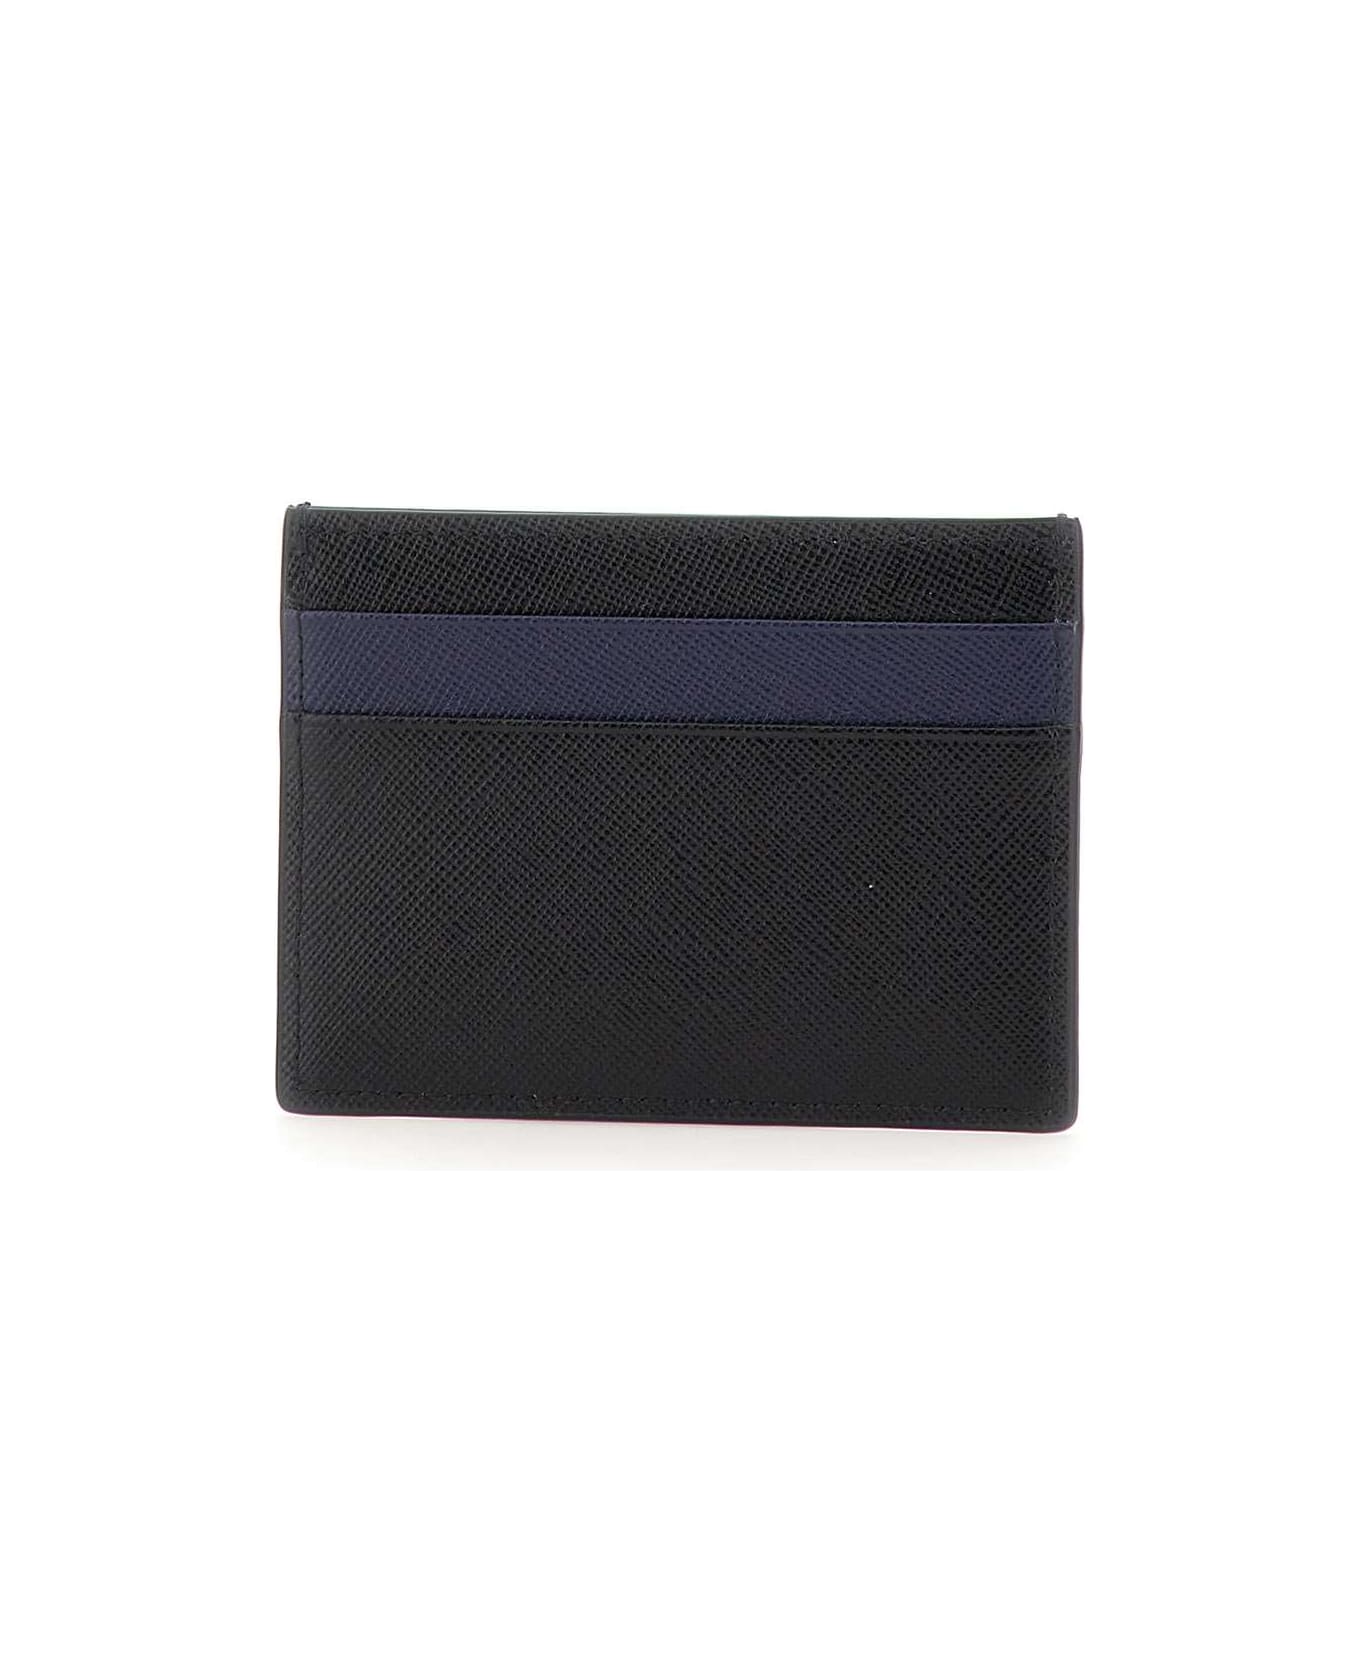 Marni 'cc Holder' Leather Card Holder - BLACK/BLUBLACK